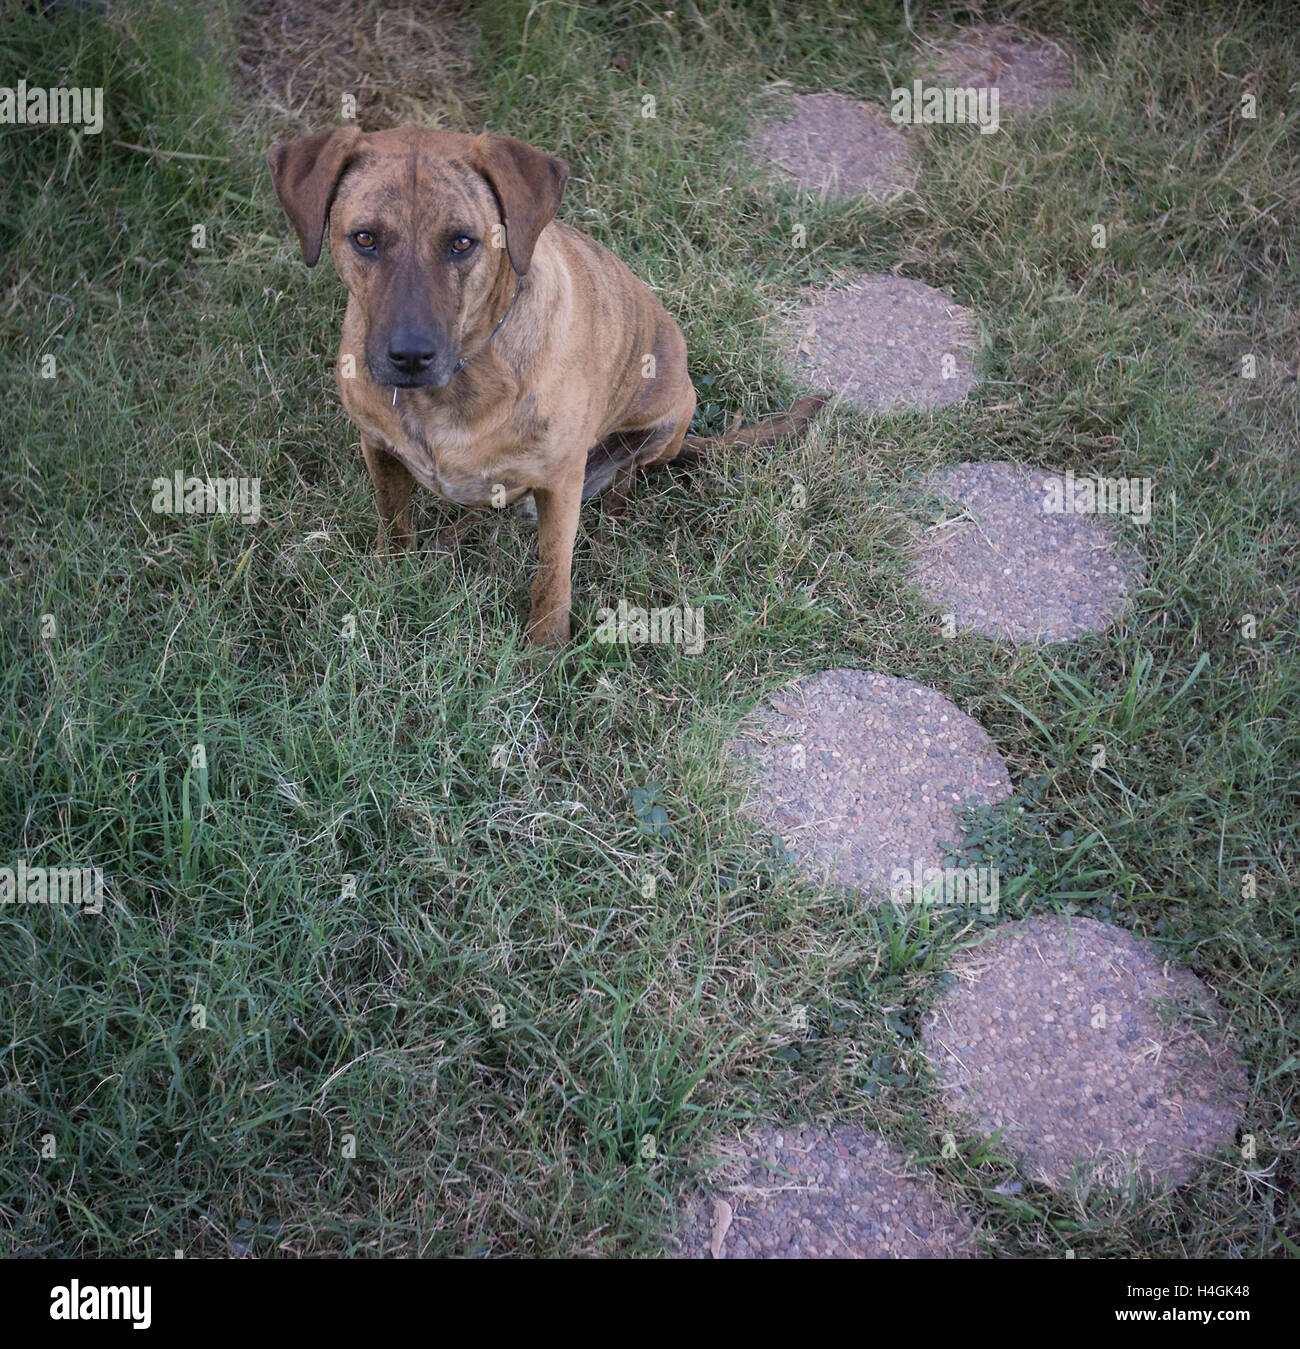 Catahoula dog in a city backyard. Stock Photo